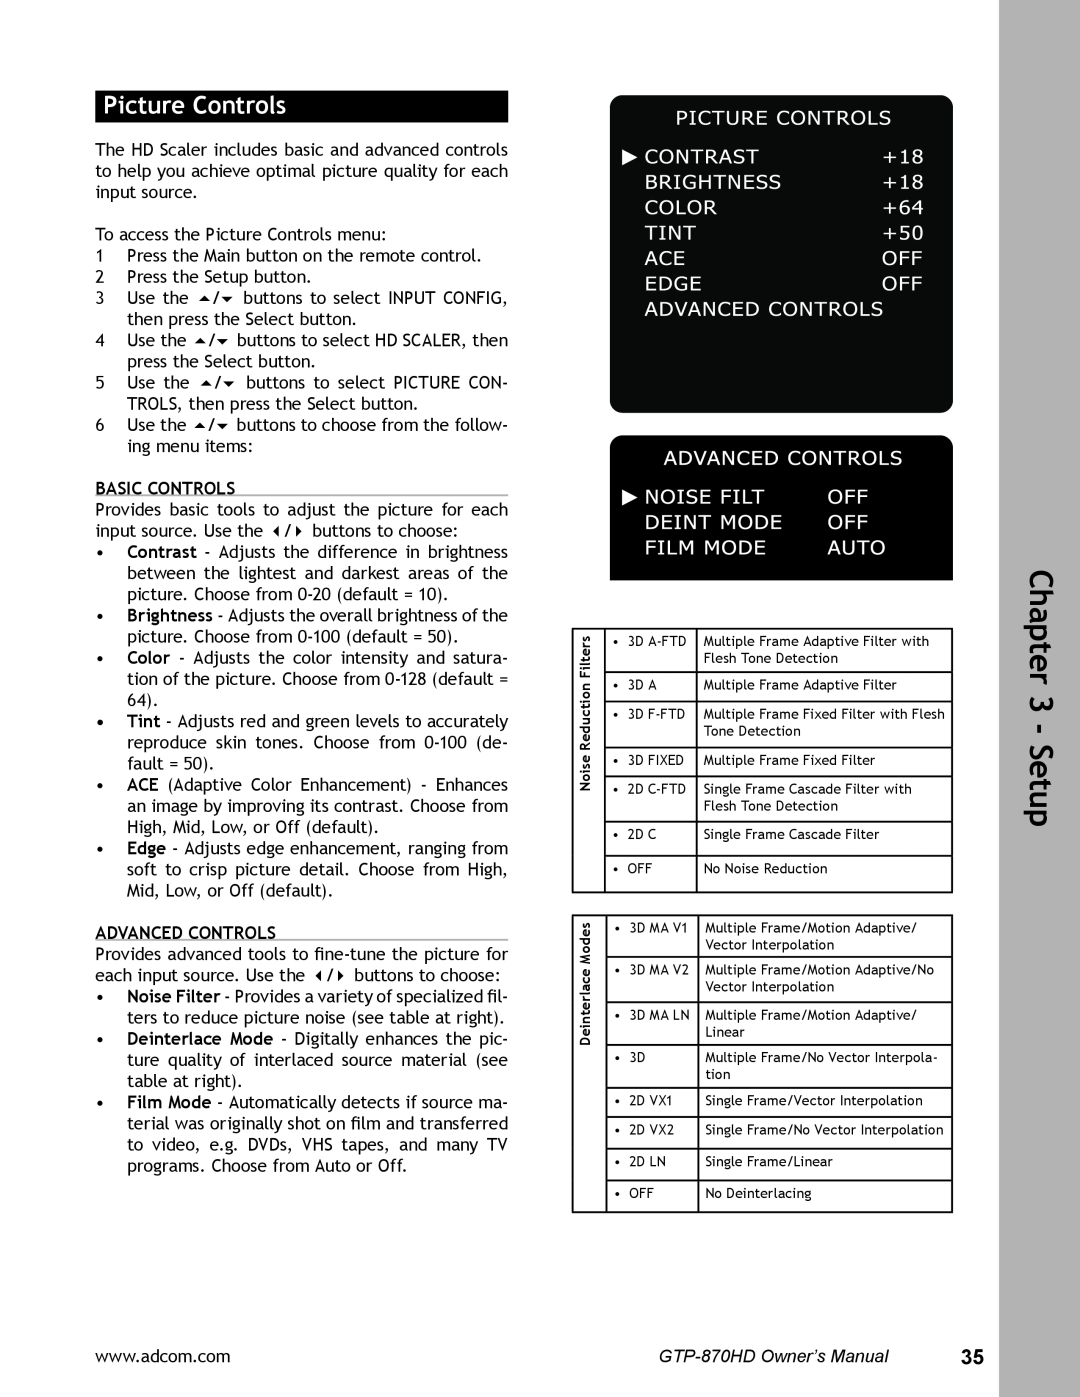 Adcom user manual Picture Controls, Basic Controls, Advanced Controls, Setup, GTP-870HDOwner’s Manual 